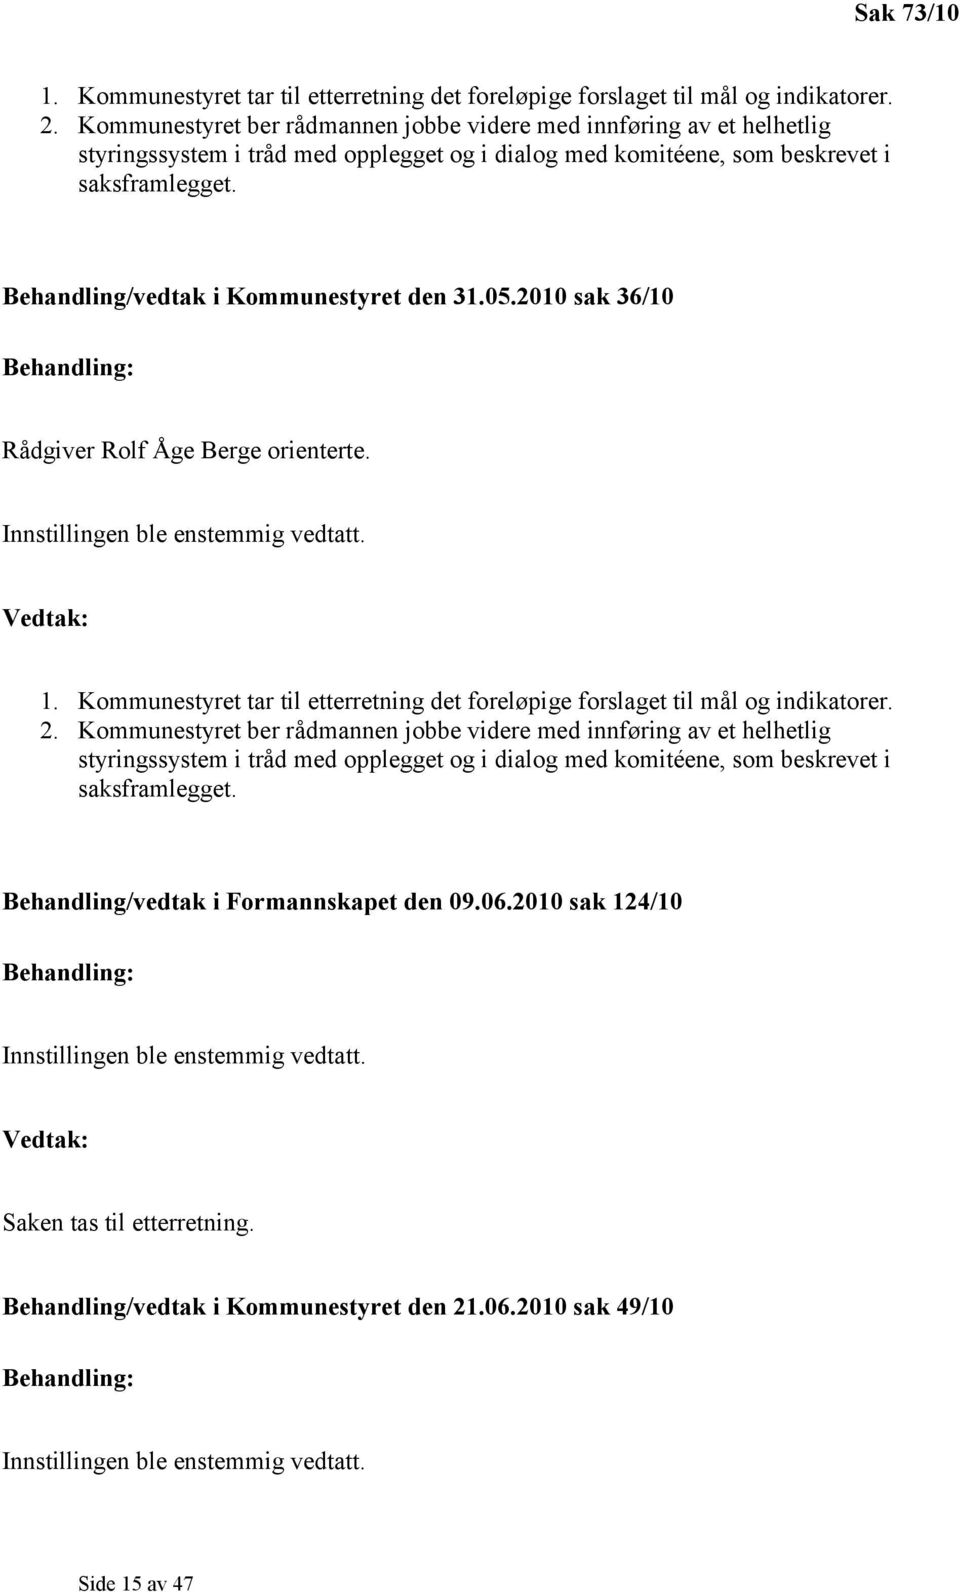 Behandling/vedtak i Kommunestyret den 31.05.2010 sak 36/10 Rådgiver Rolf Åge Berge orienterte. Innstillingen ble enstemmig vedtatt. 1.